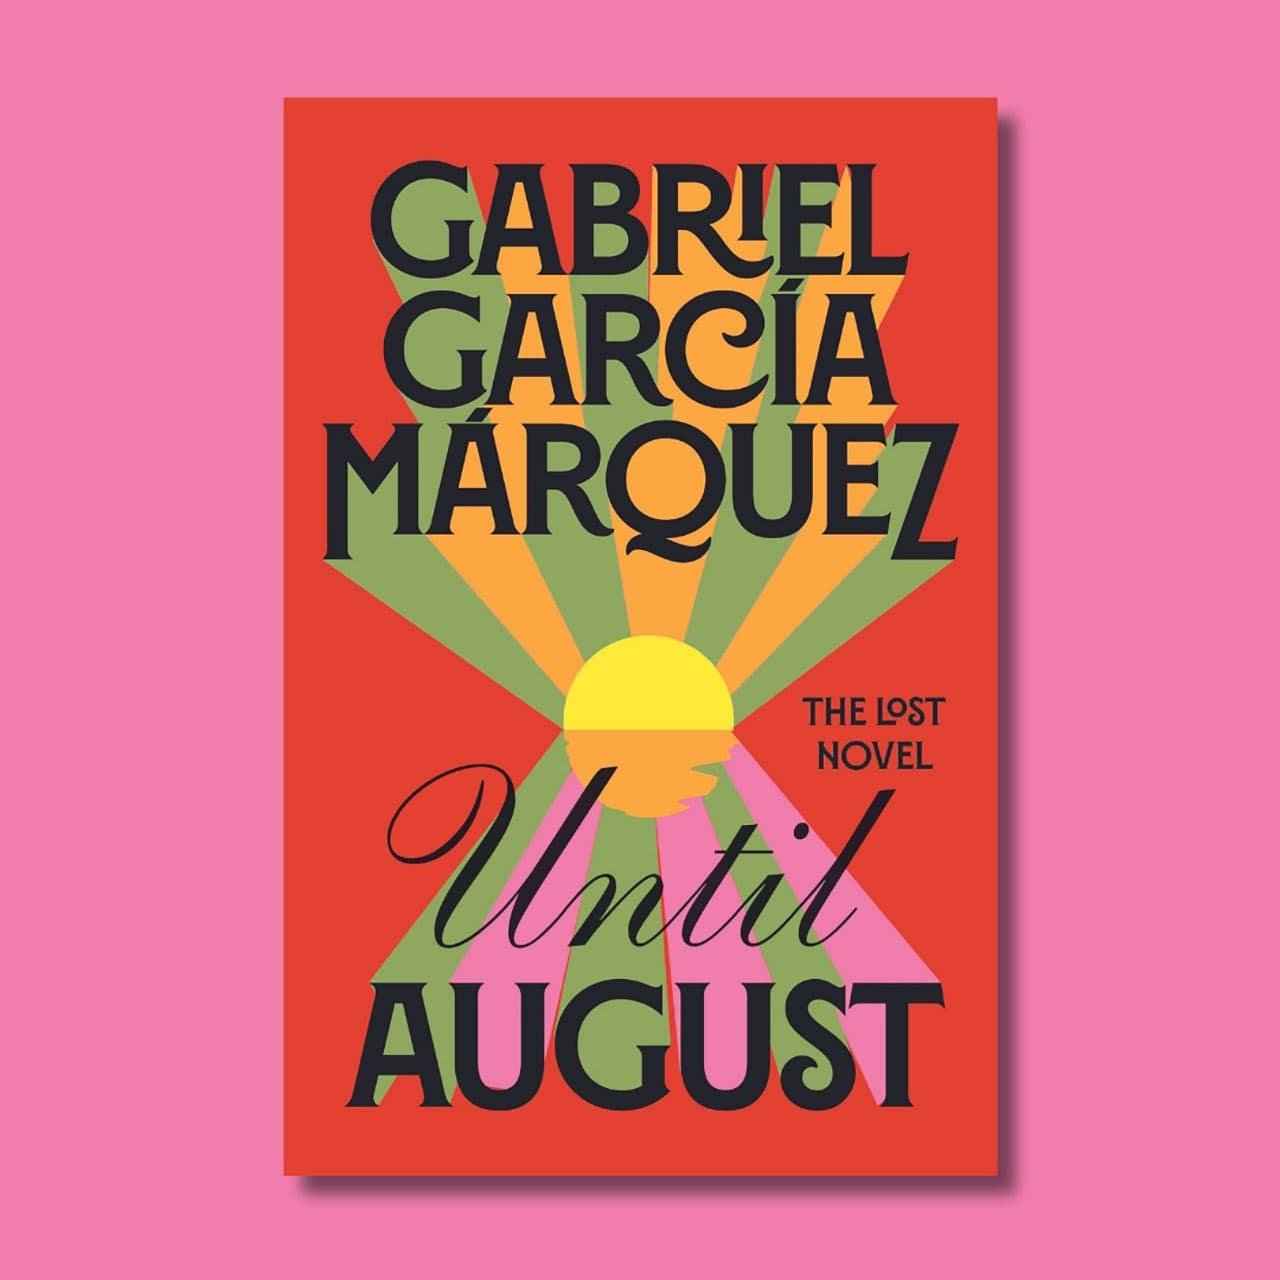 Ringkasan Cerita Until August Karya Gabriel Garcia Marquez, Lengkap Amanat Cerita